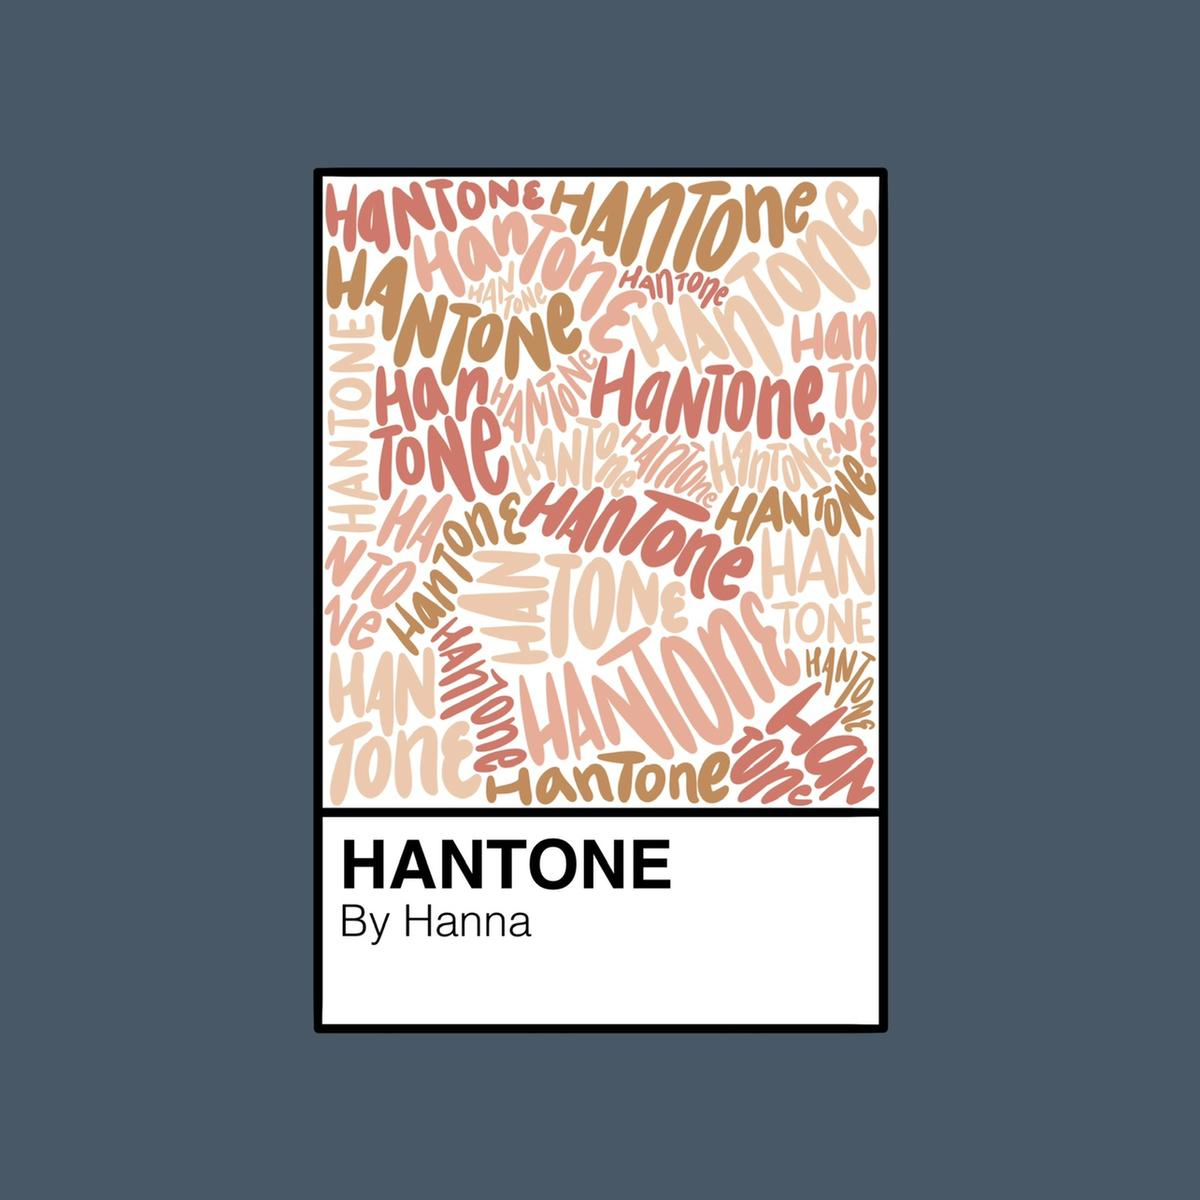 HANTONE's images